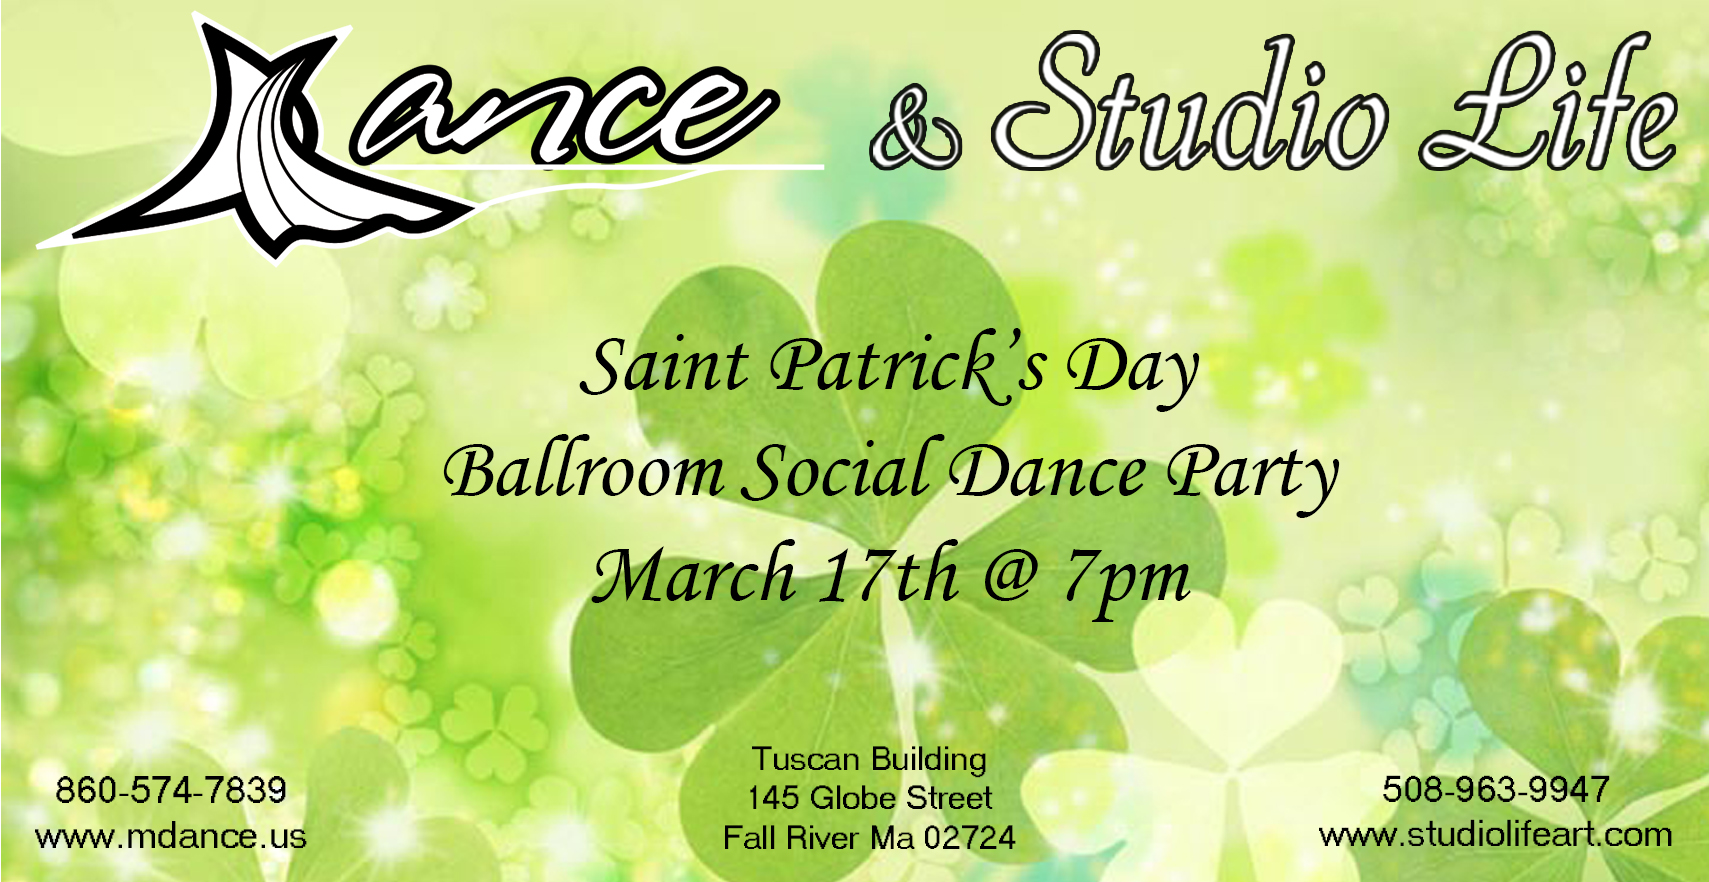 m dance studio events fall river saint patrick's day social dance party march 17th 7pm